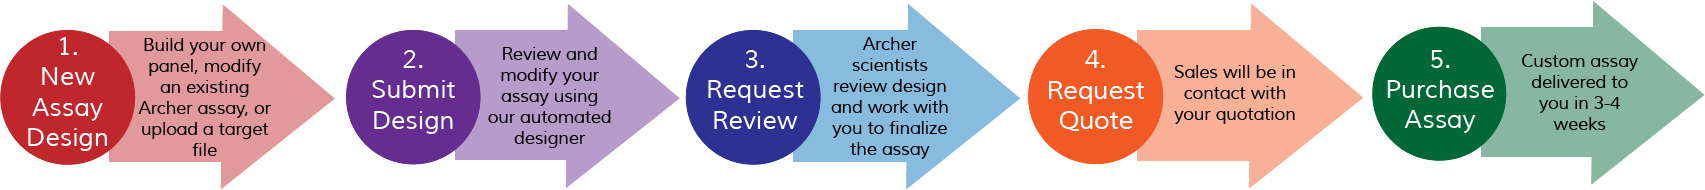 Archer Assay Designer process overview